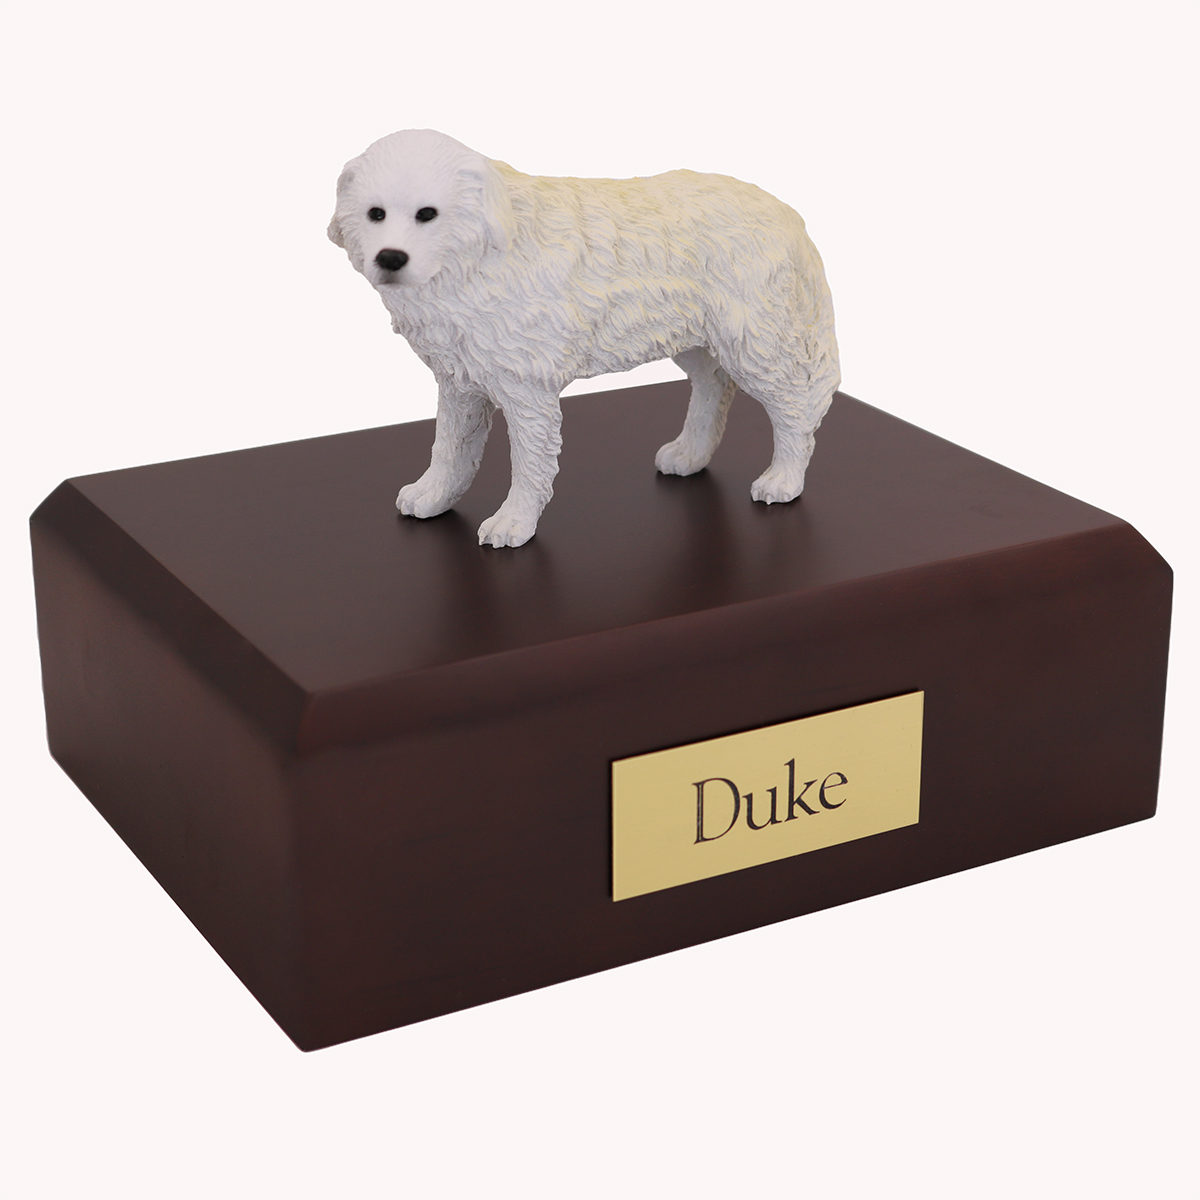 Dog, Great Pyrenees - Figurine Urn